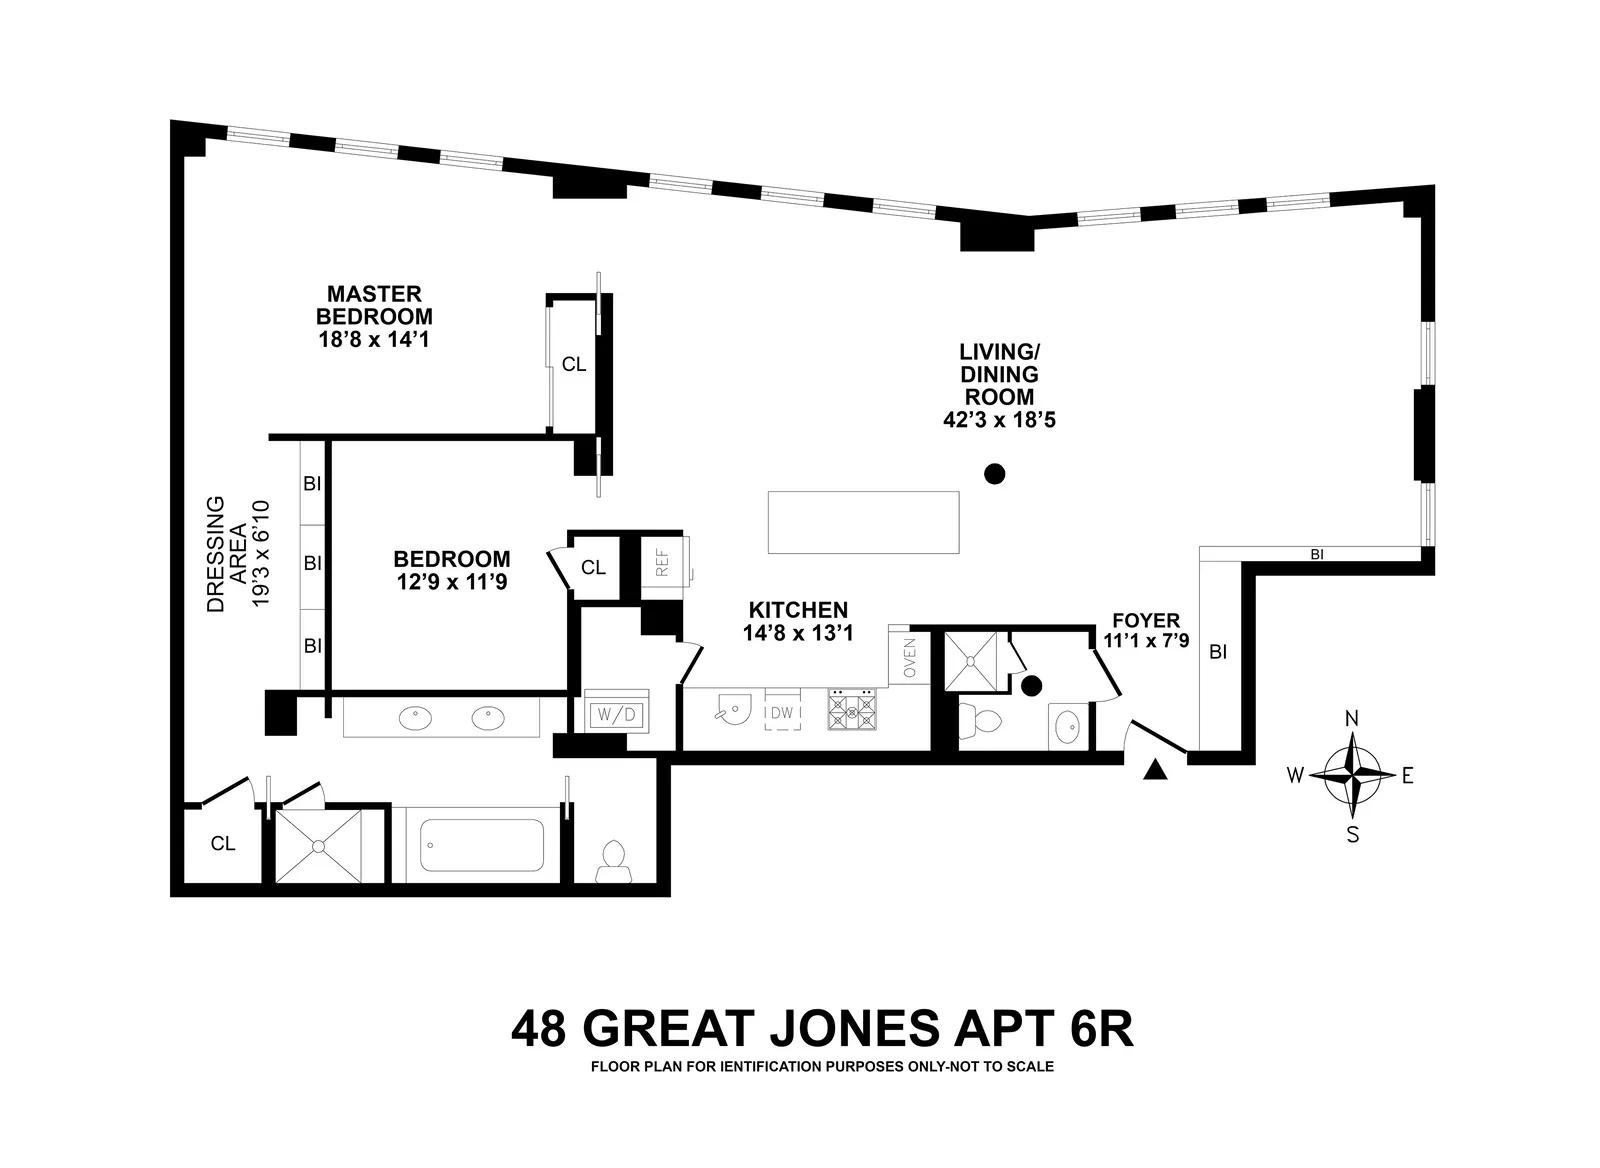 48 Great Jones Street, 6R | floorplan | View 10